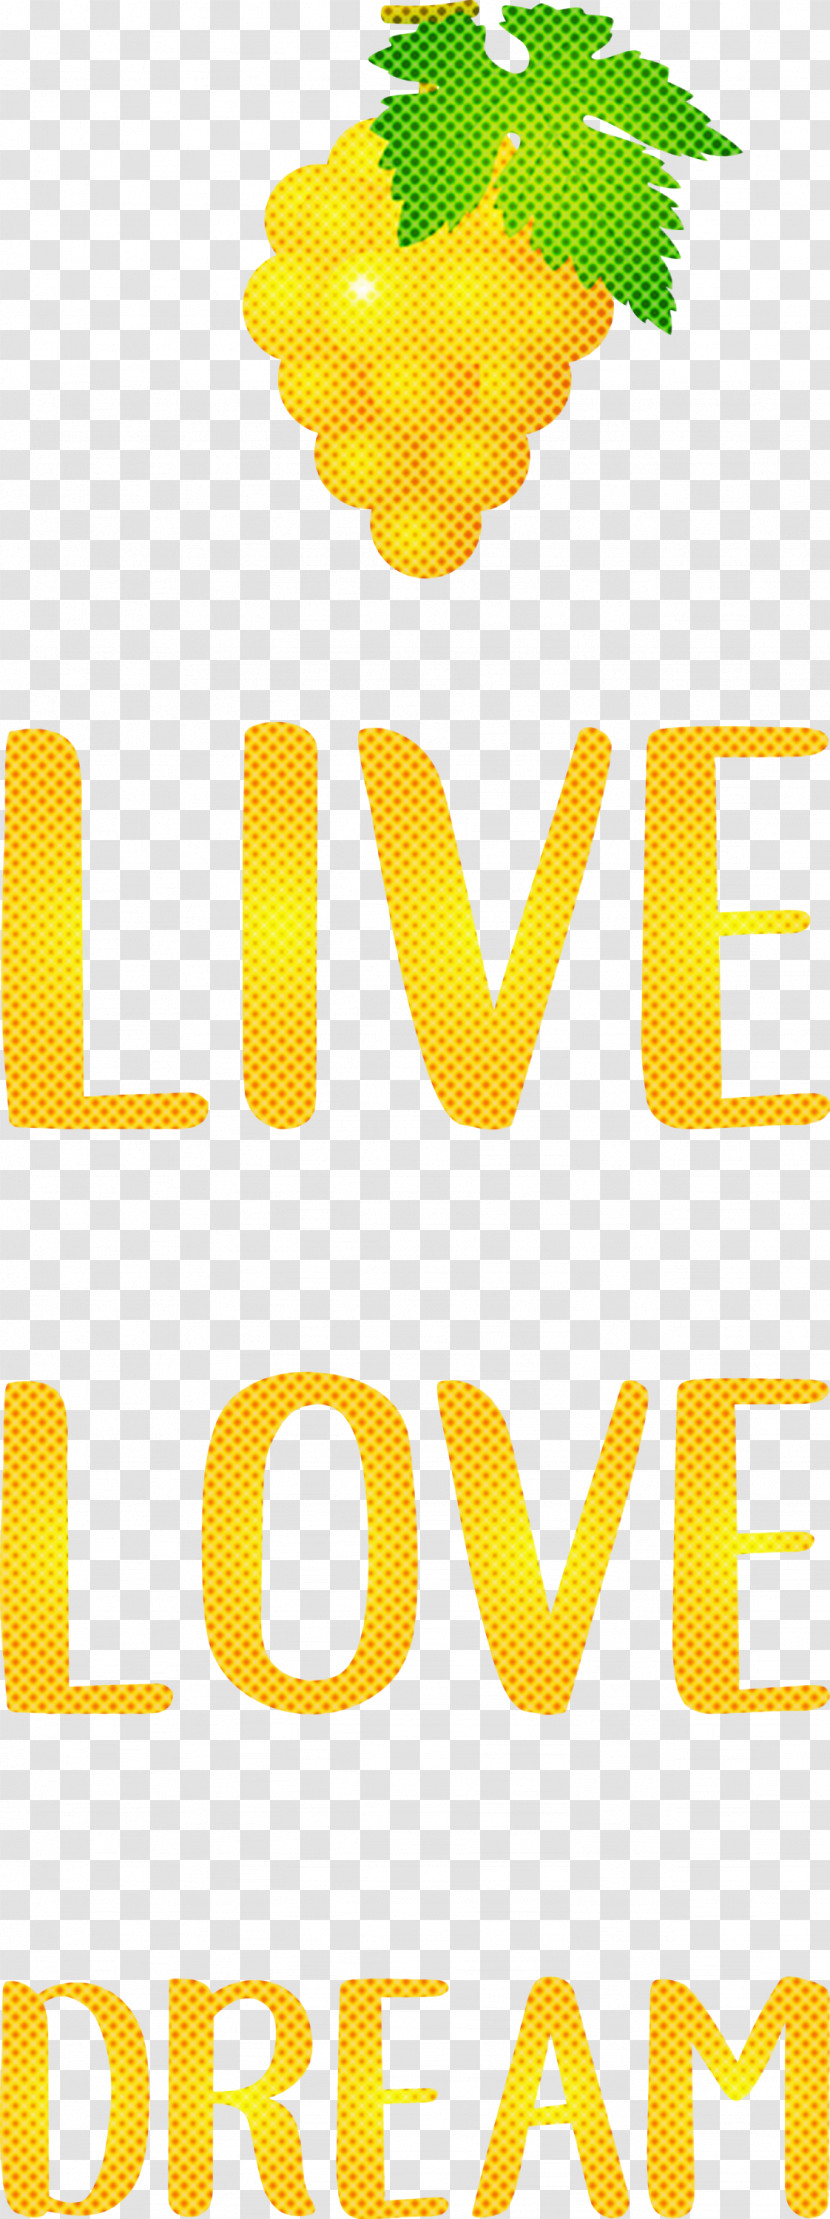 Live Love Dream Transparent PNG